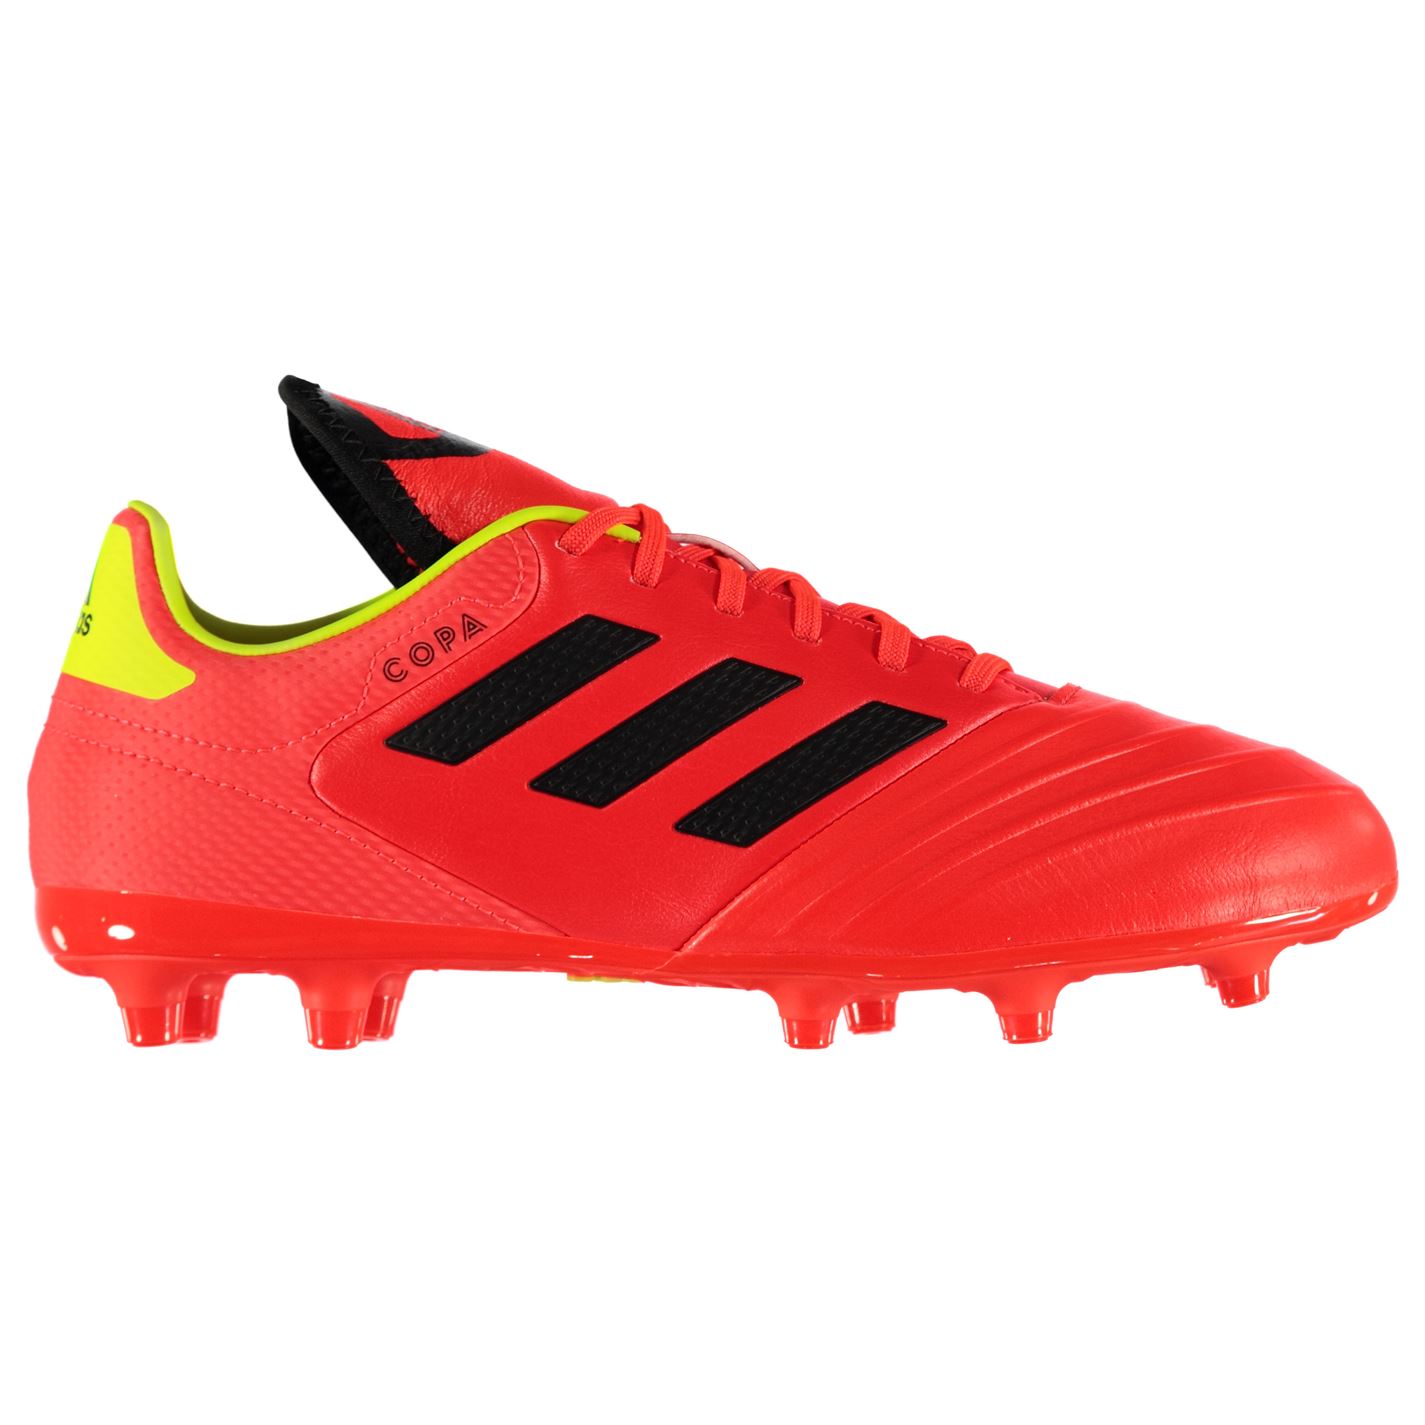 Adidas Copa 18.3 FG Men’s Football Boots